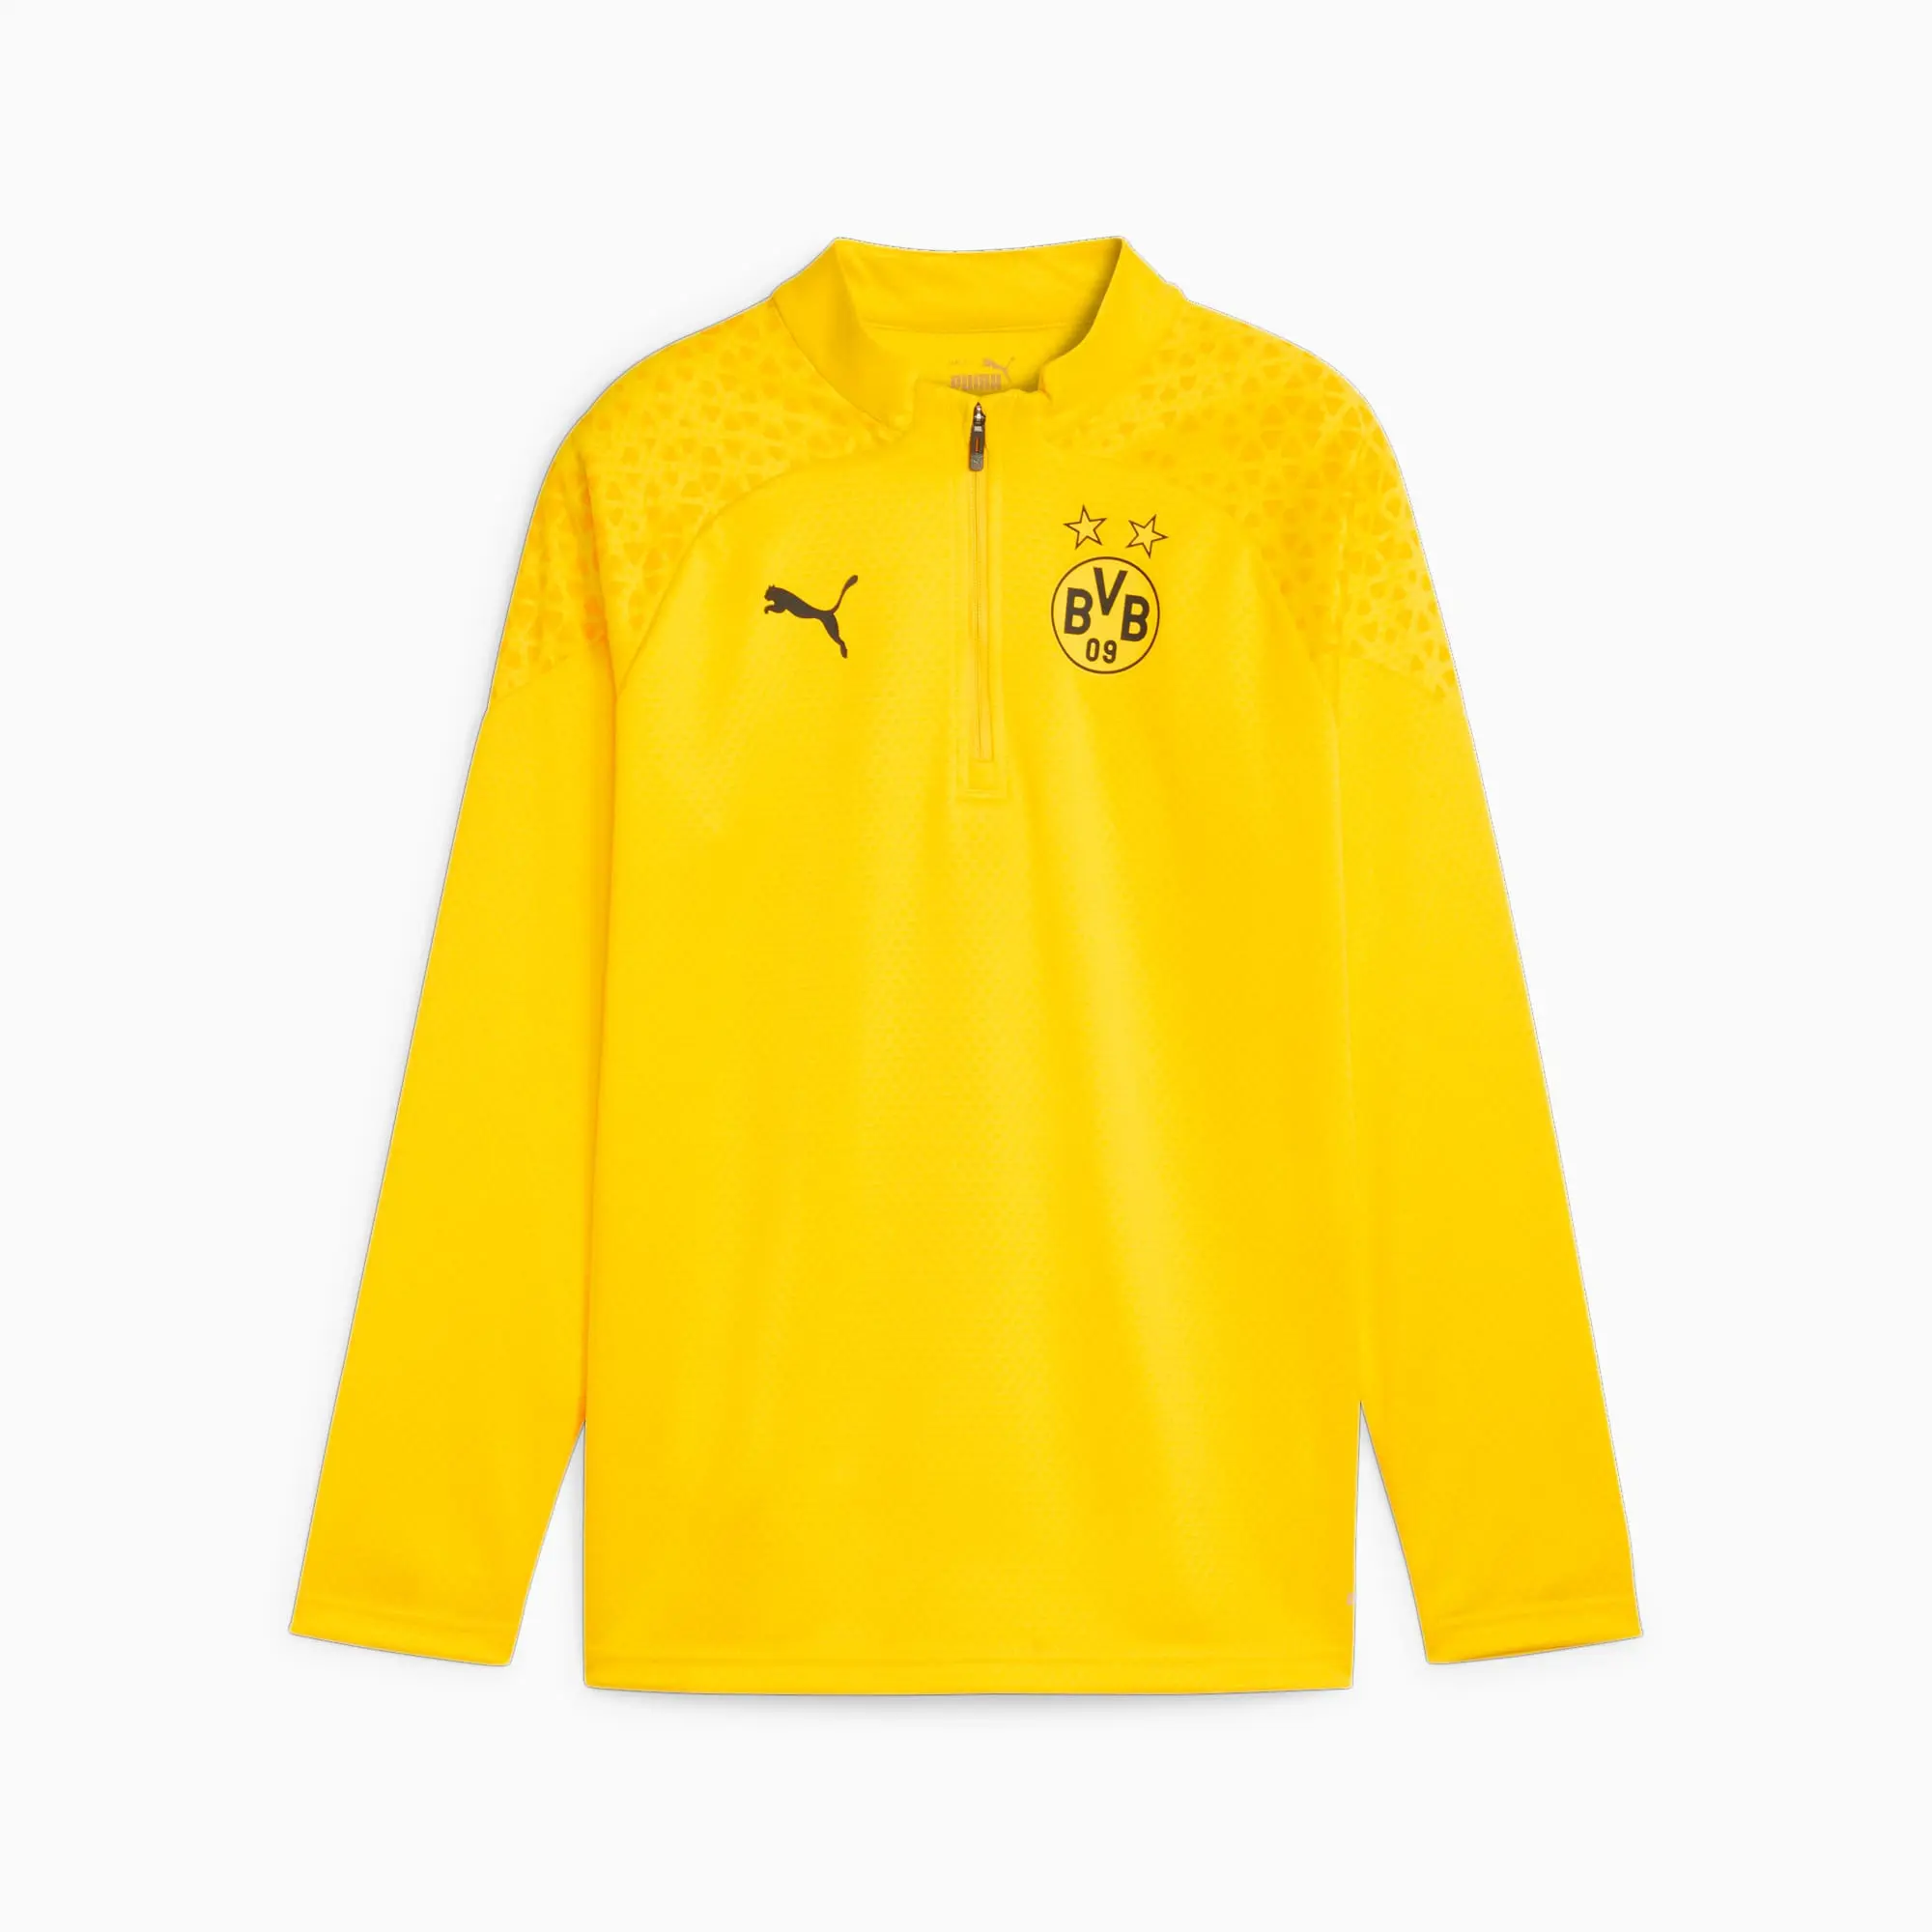 PUMA Borussia Dortmund Football Youth Quarter-Zip Training Top Shirt, Cyber Yellow/Black